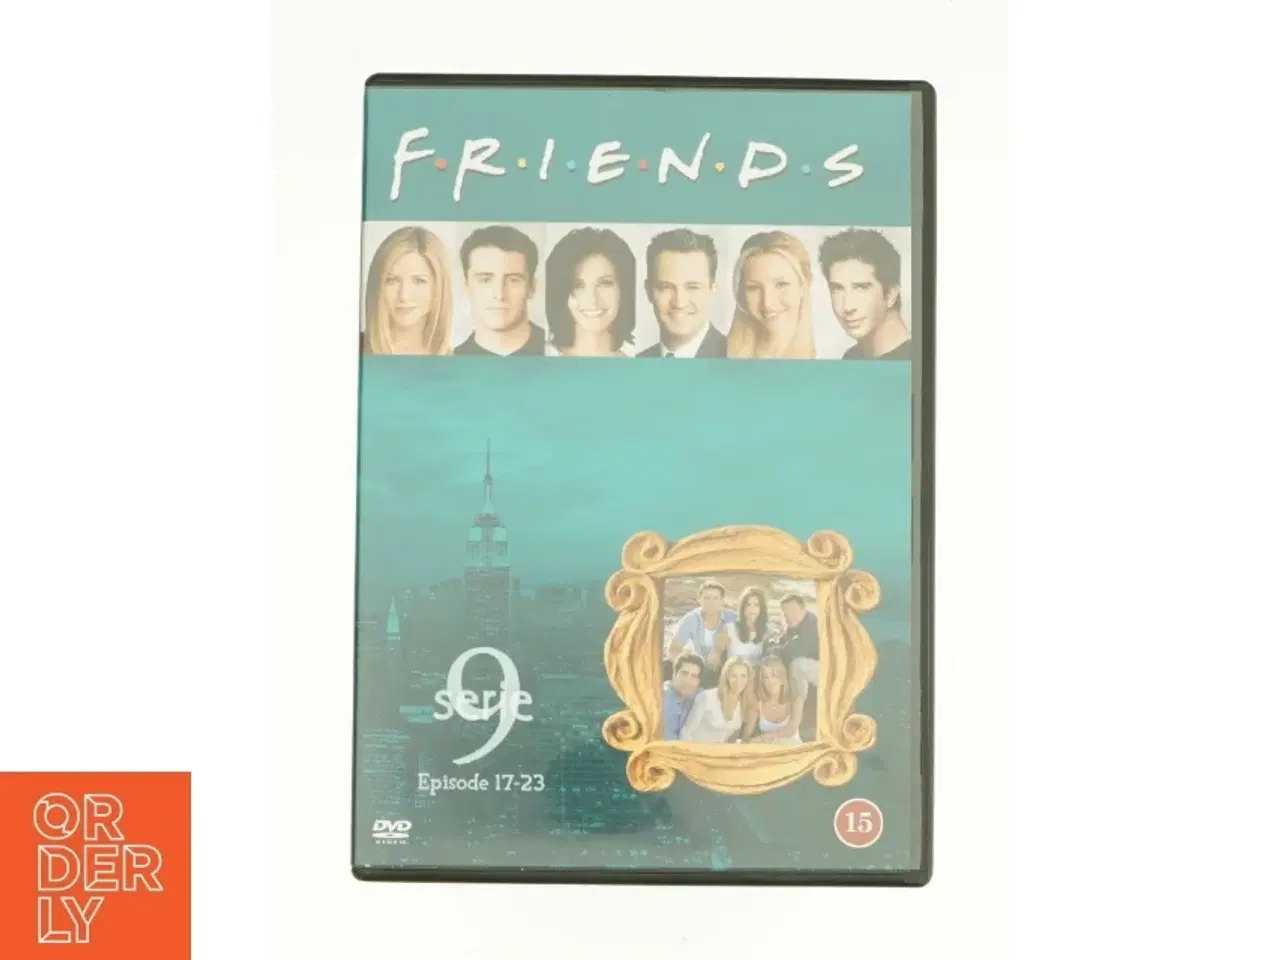 Billede 1 - Friends: Season 9 Episodes 17-23                            <span class="label label-blank pull-right">Standard edition</span> fra DVD